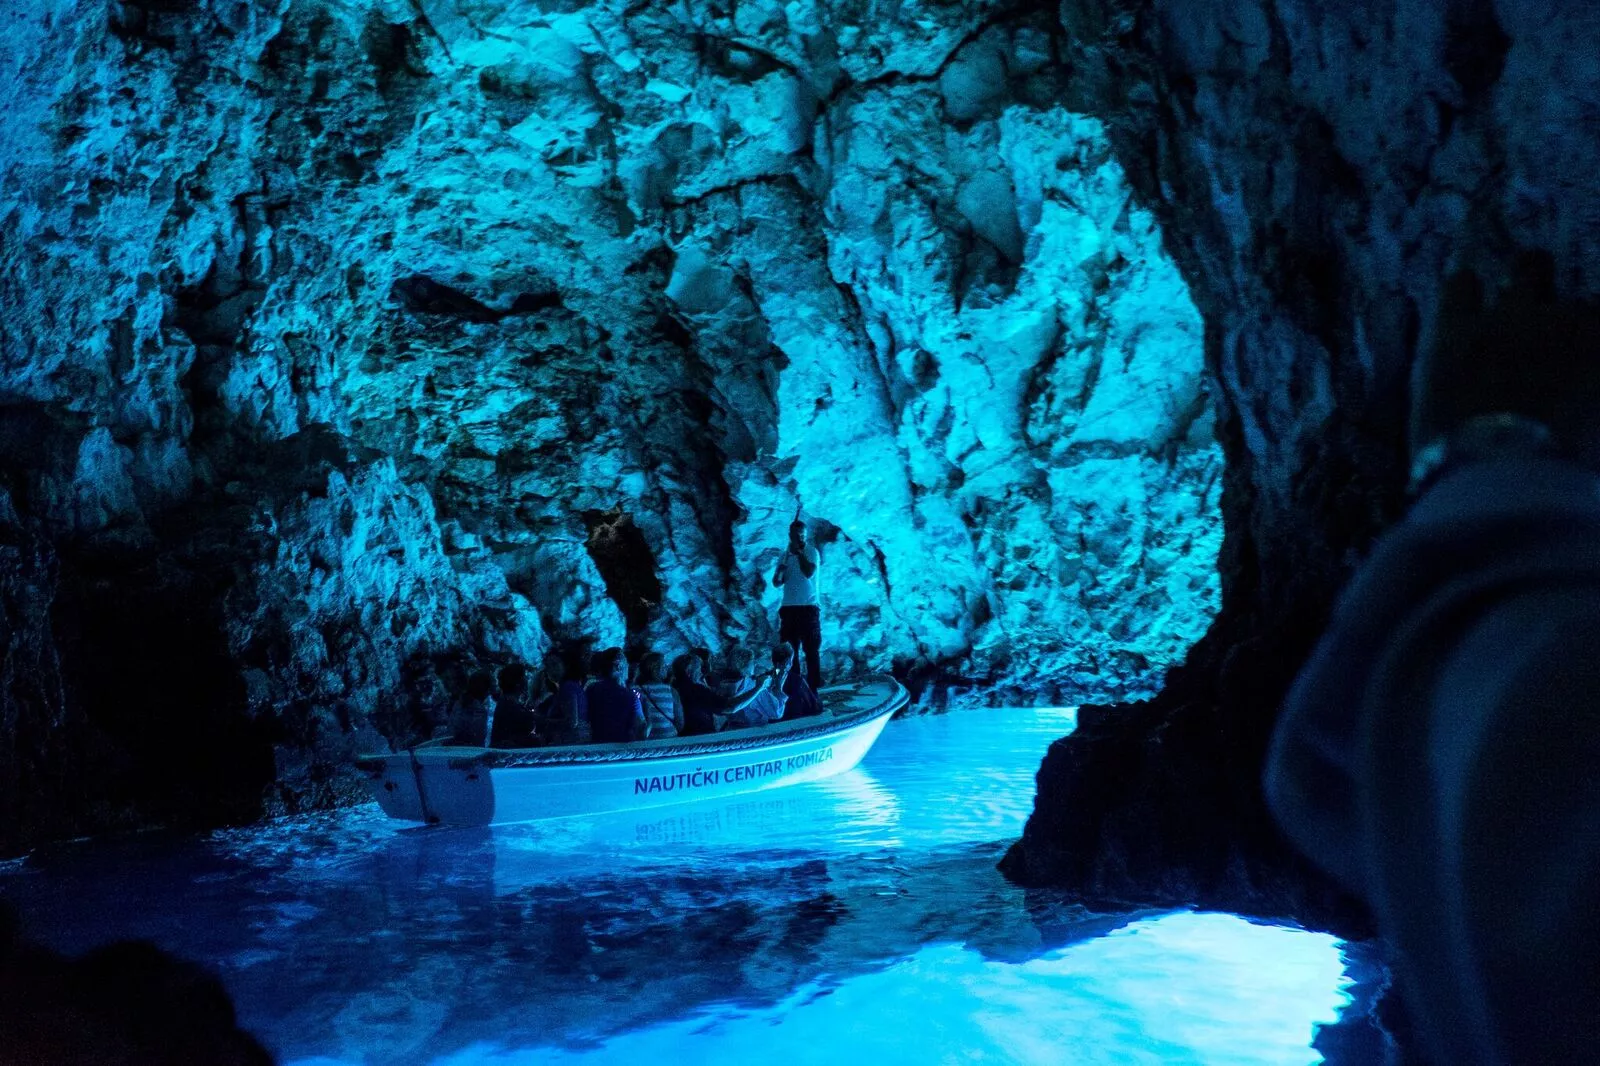 Blue cave